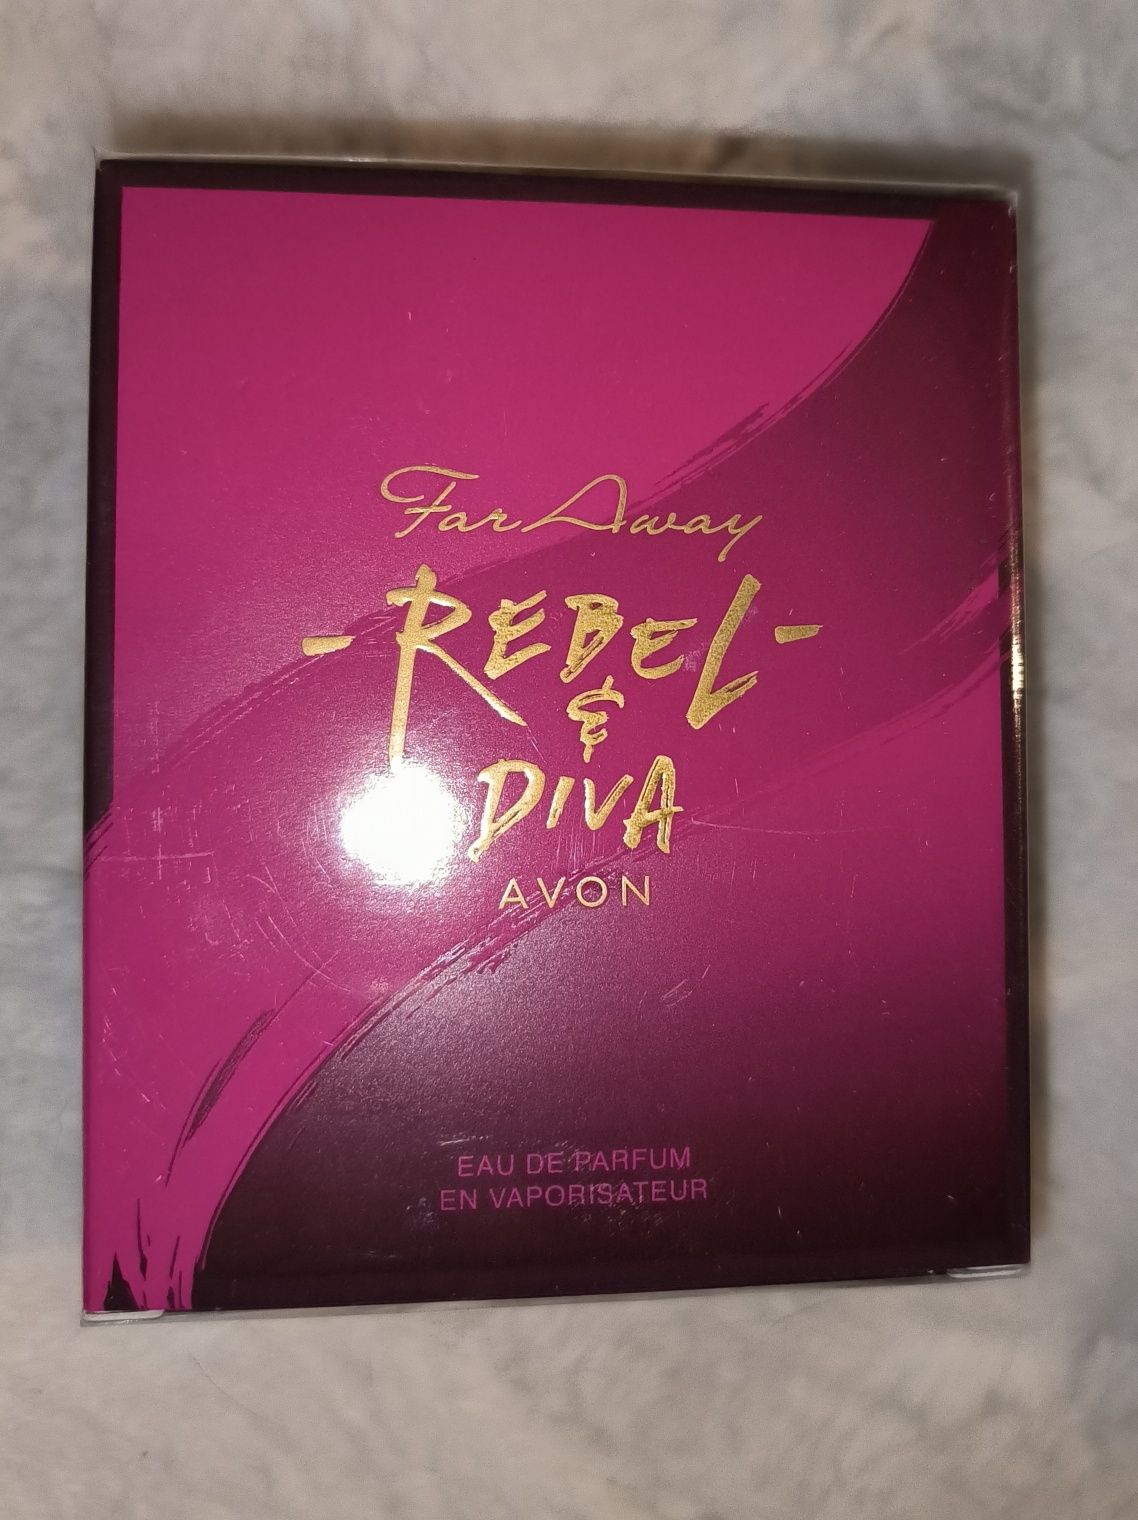 Nowe damskie perfumy Avon Far Away Rebel Diva 50ml